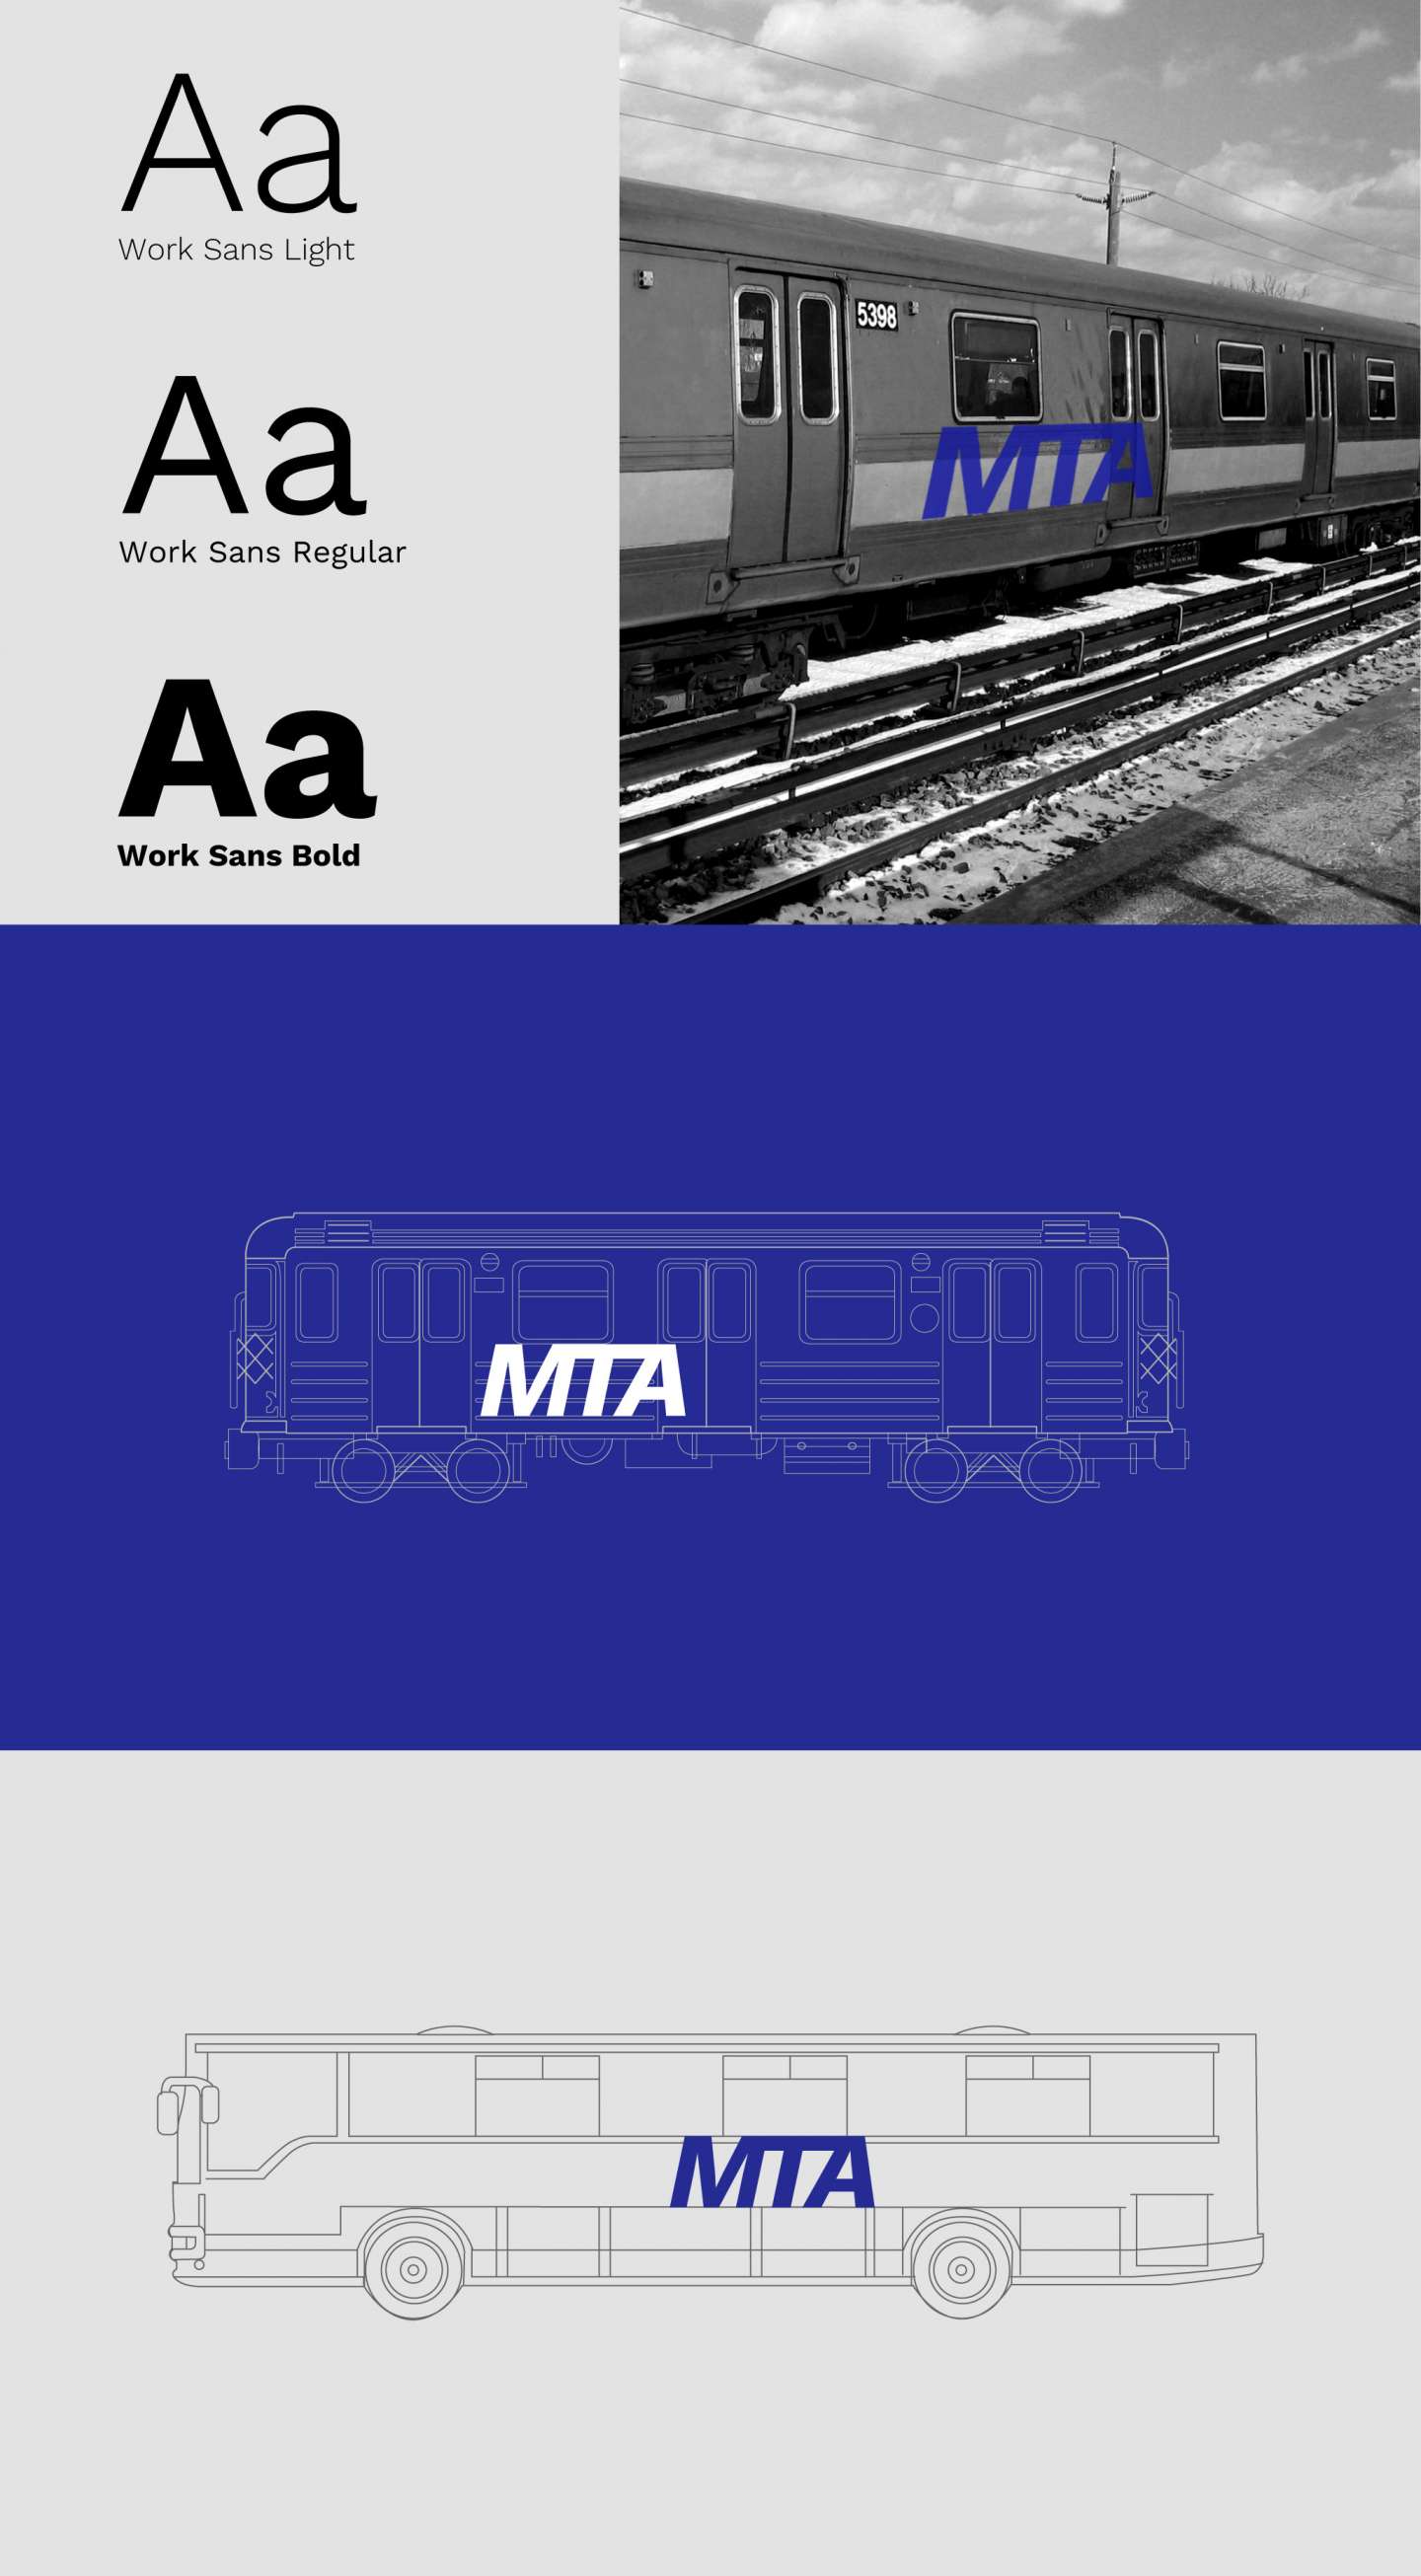 MTA (Metropolitan Transit Authority) Rebrand